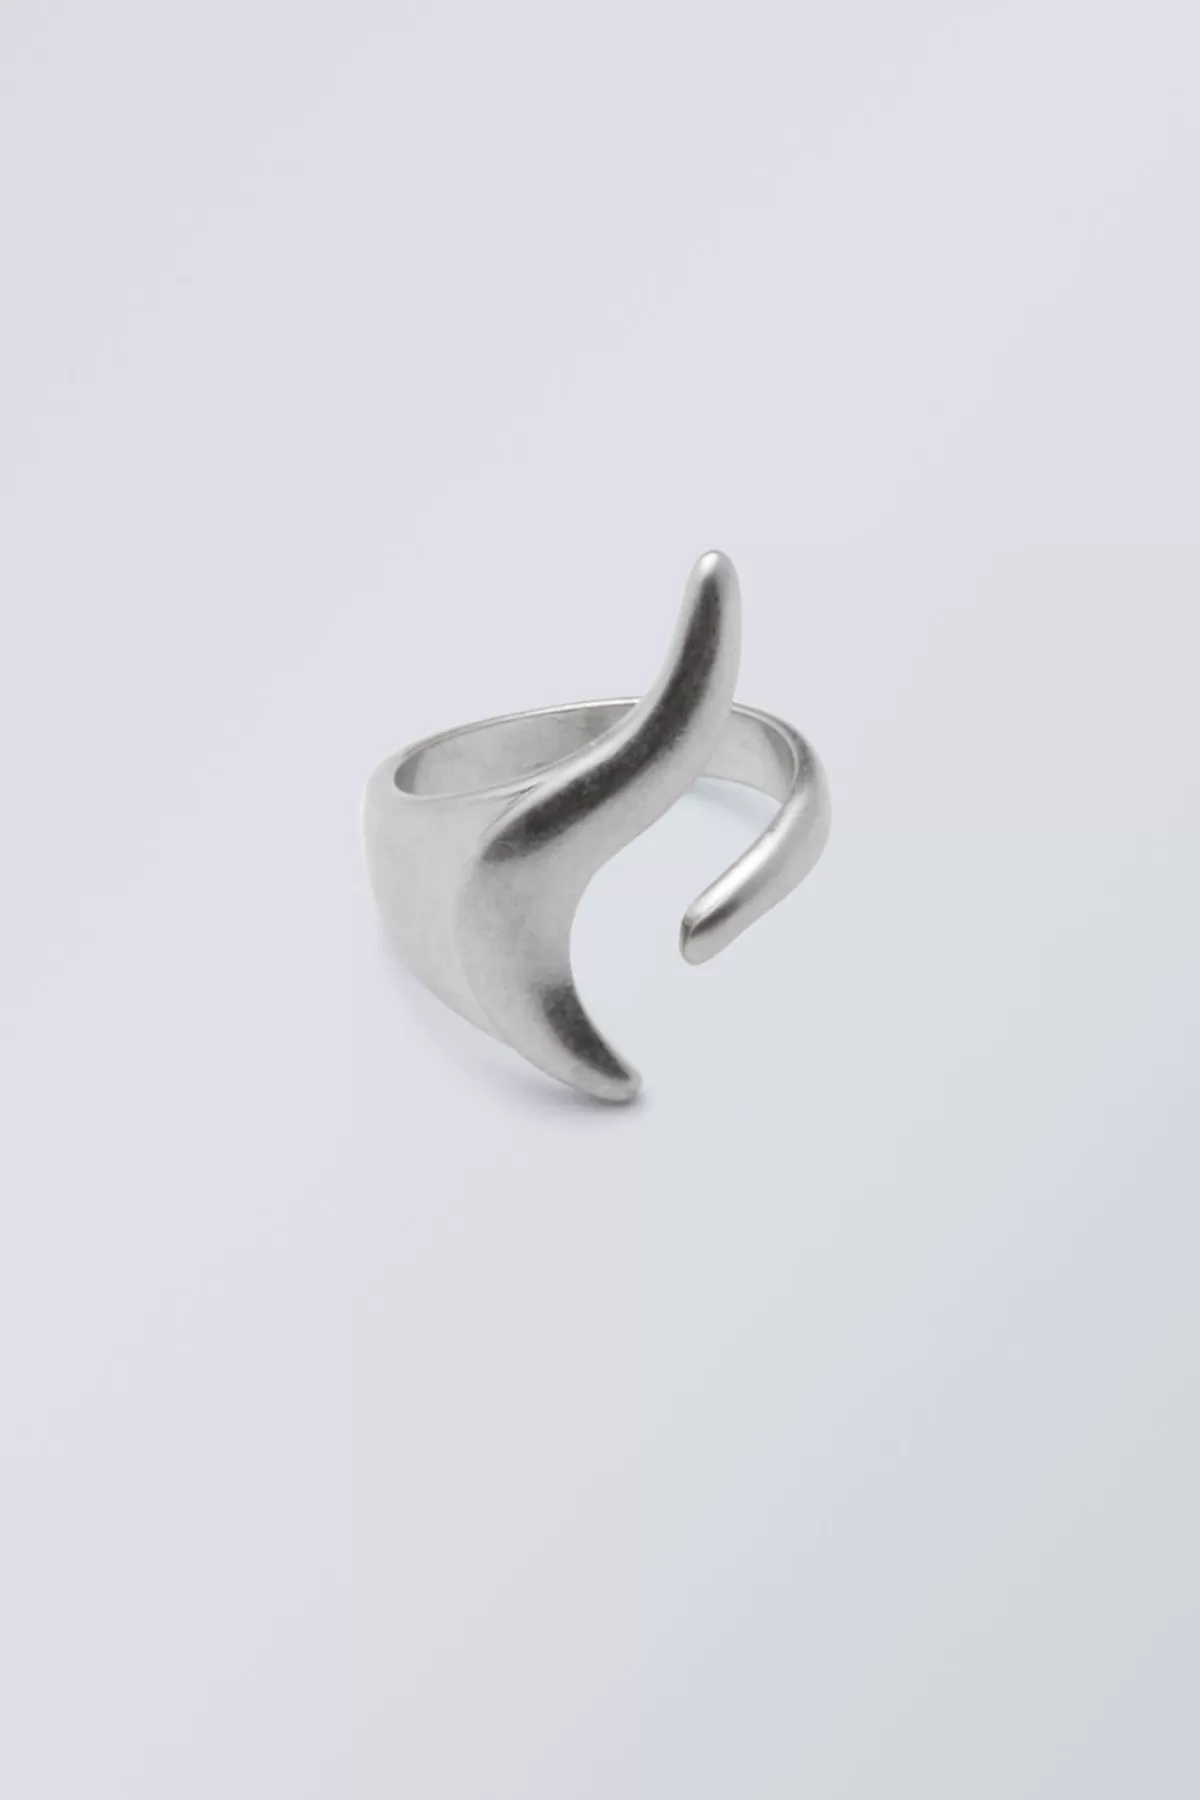 Weekday Sharp Ring Silver Flash Sale